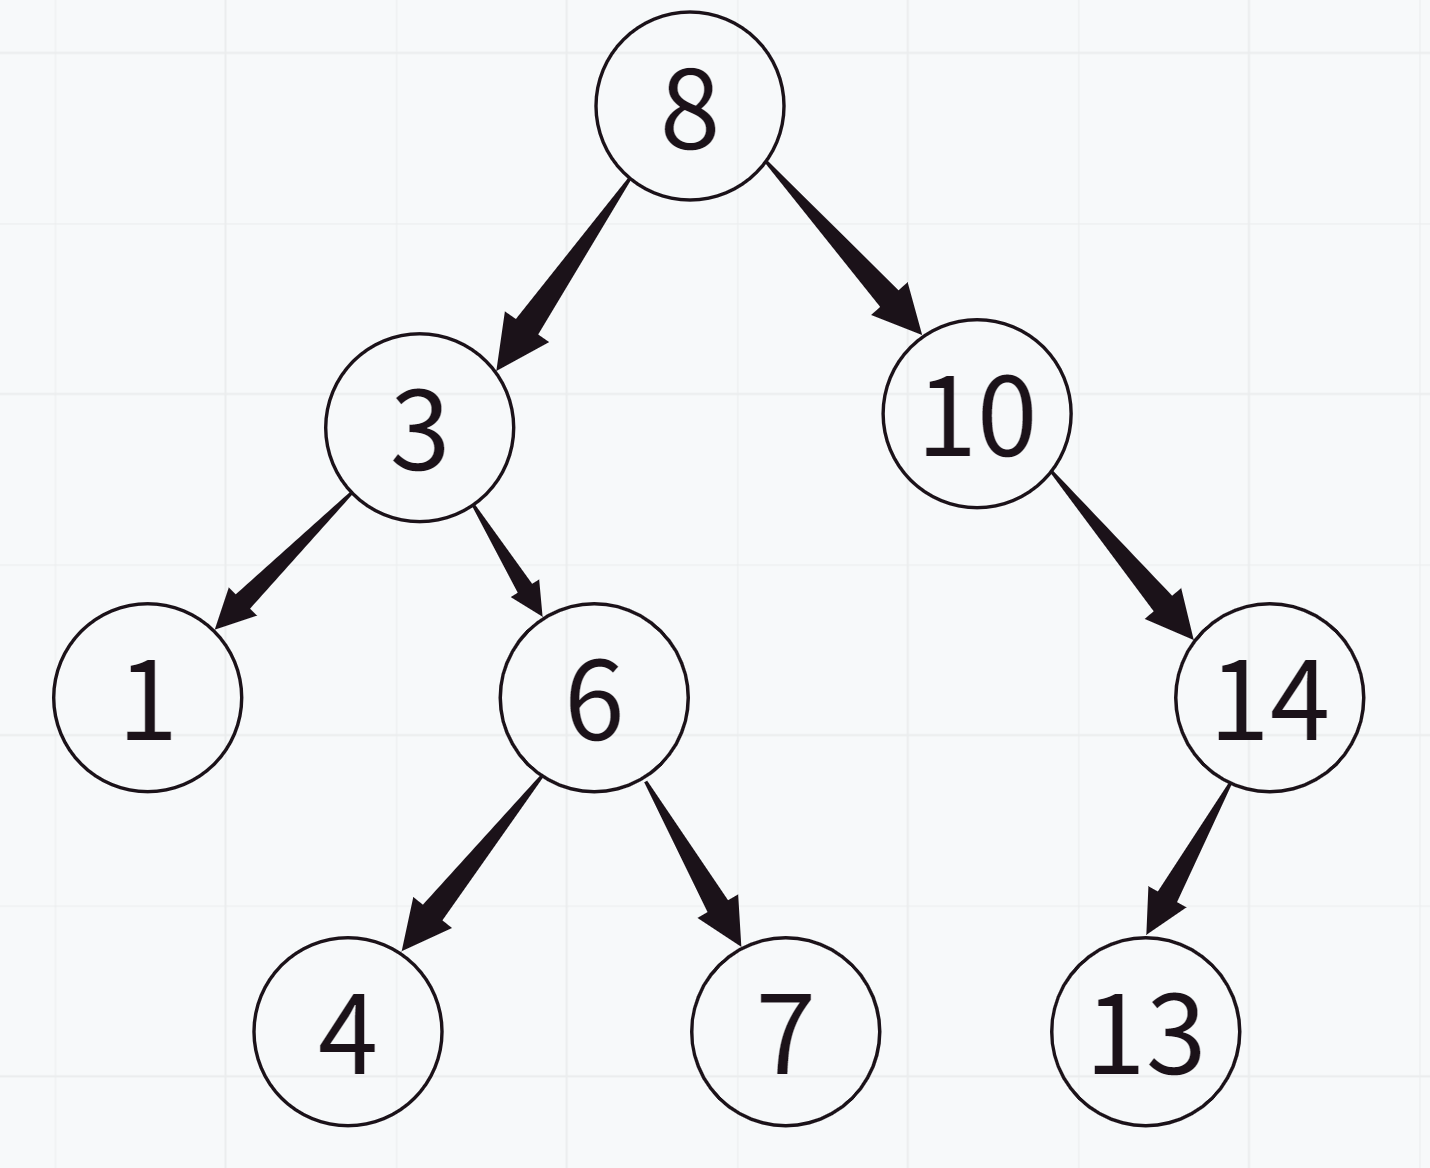 C++ 二叉搜索树(BST)的实现(非递归版本与递归版本)与应用